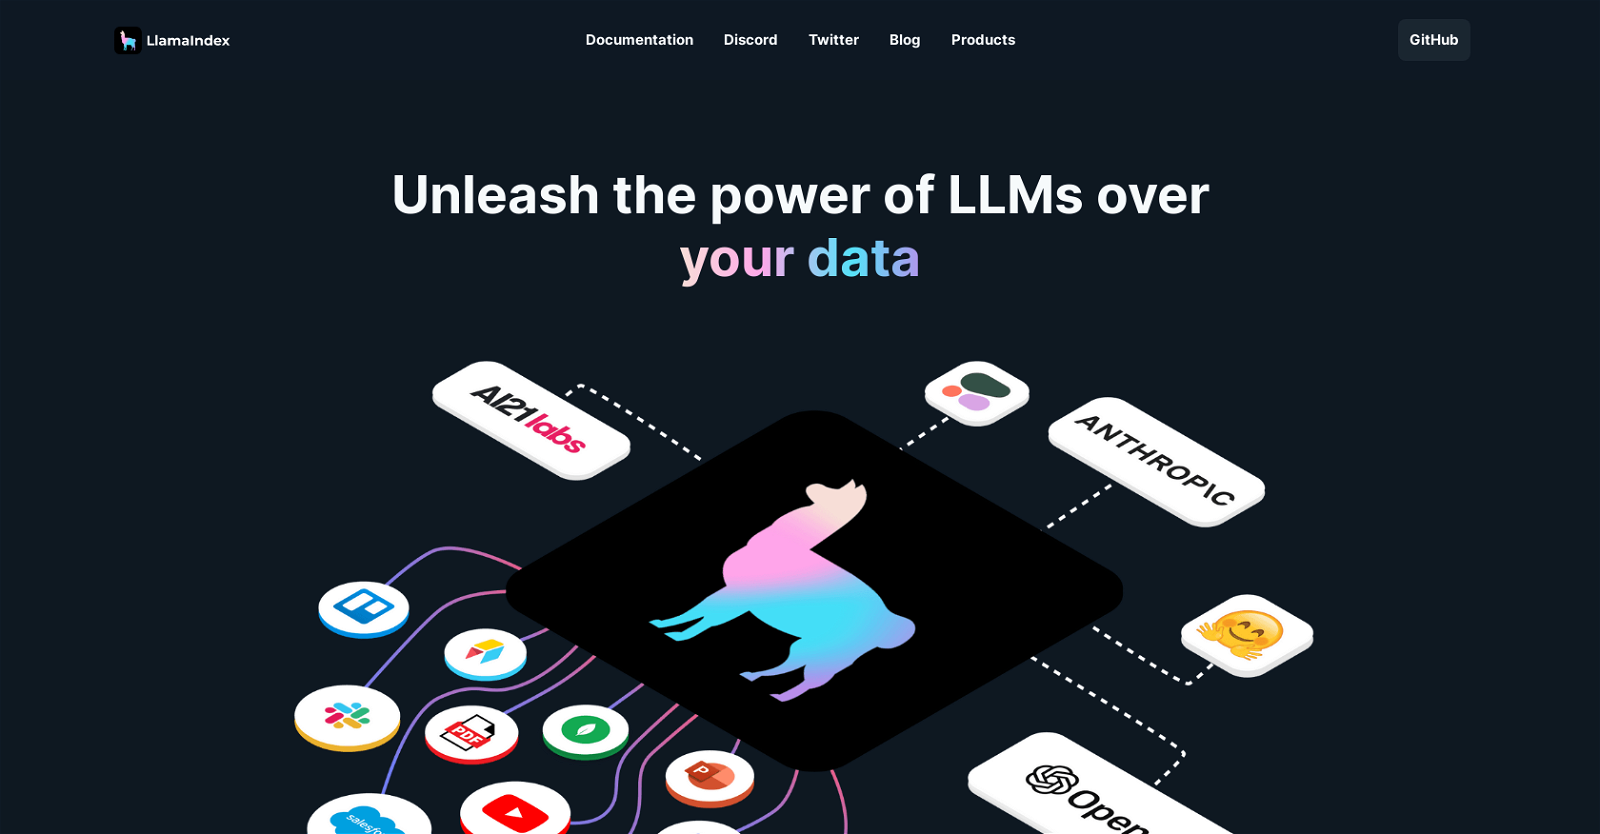 Llamaindex website